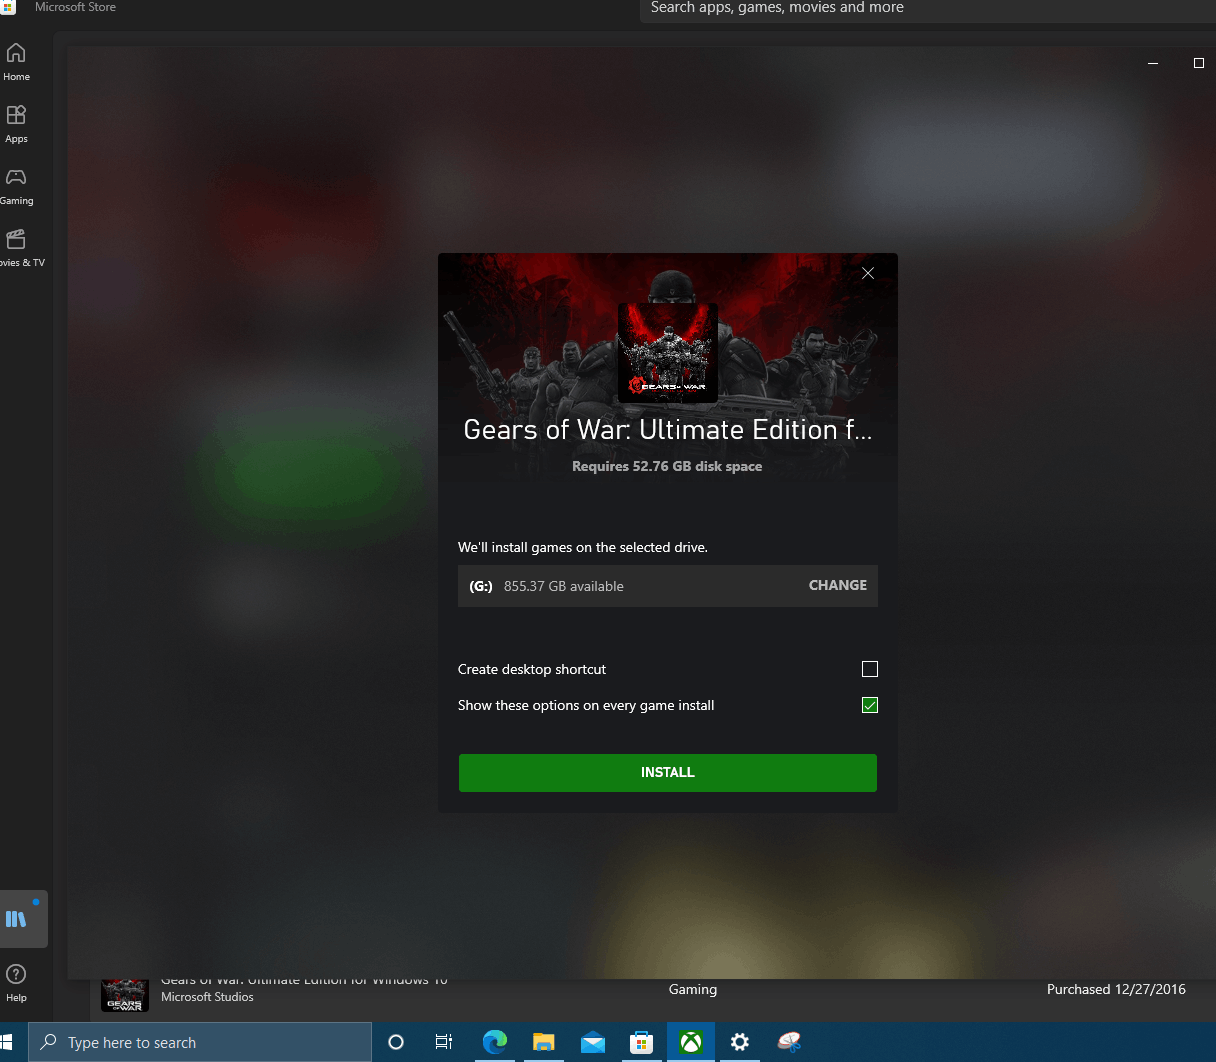 Na surdina: Gears of War Ultimate Edition chega ao Windows 10